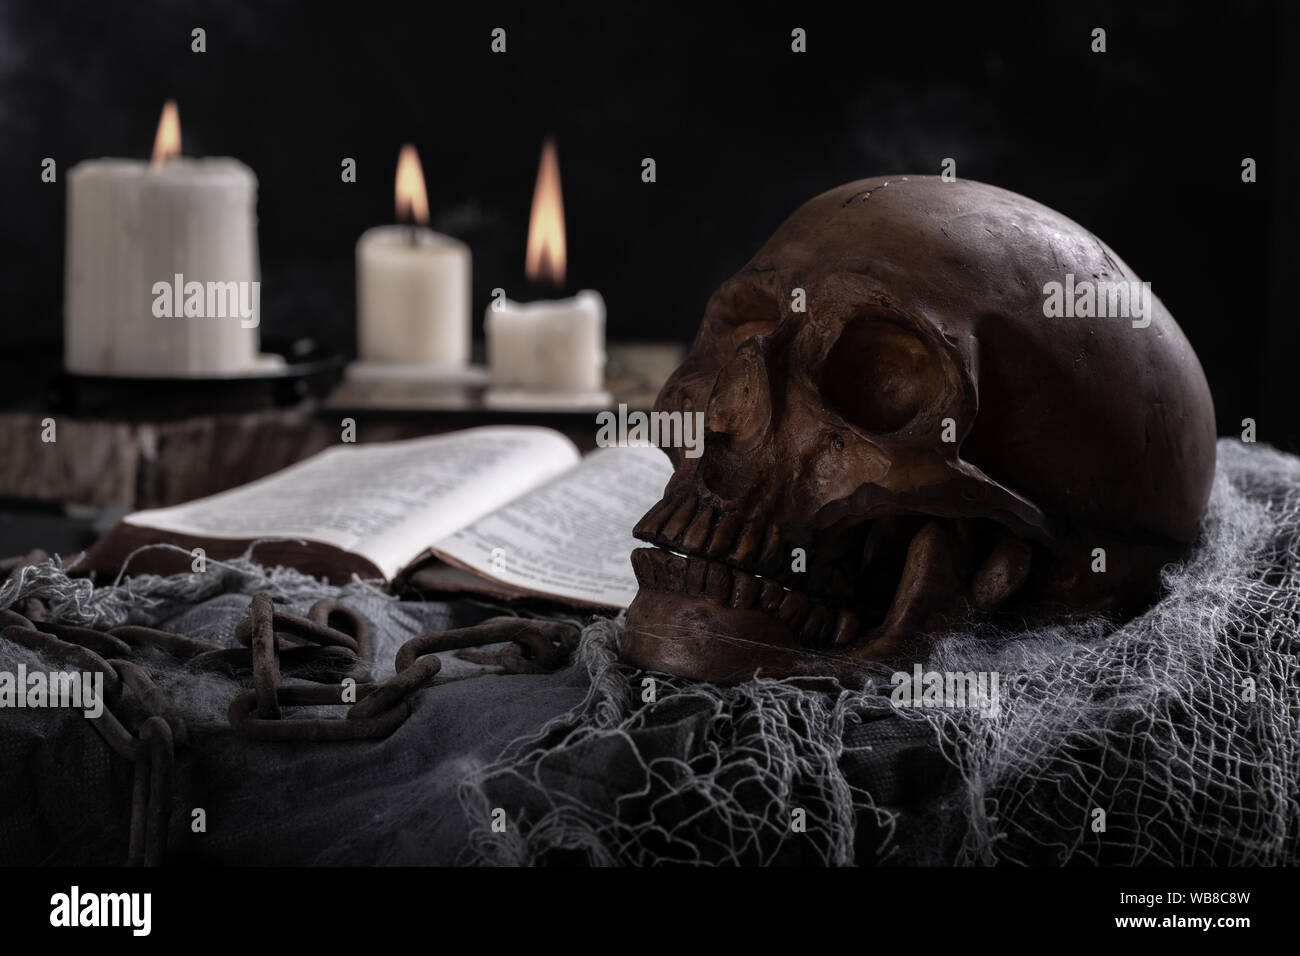 Scary teschio umano con candele accese in background il concetto di Halloween Foto Stock